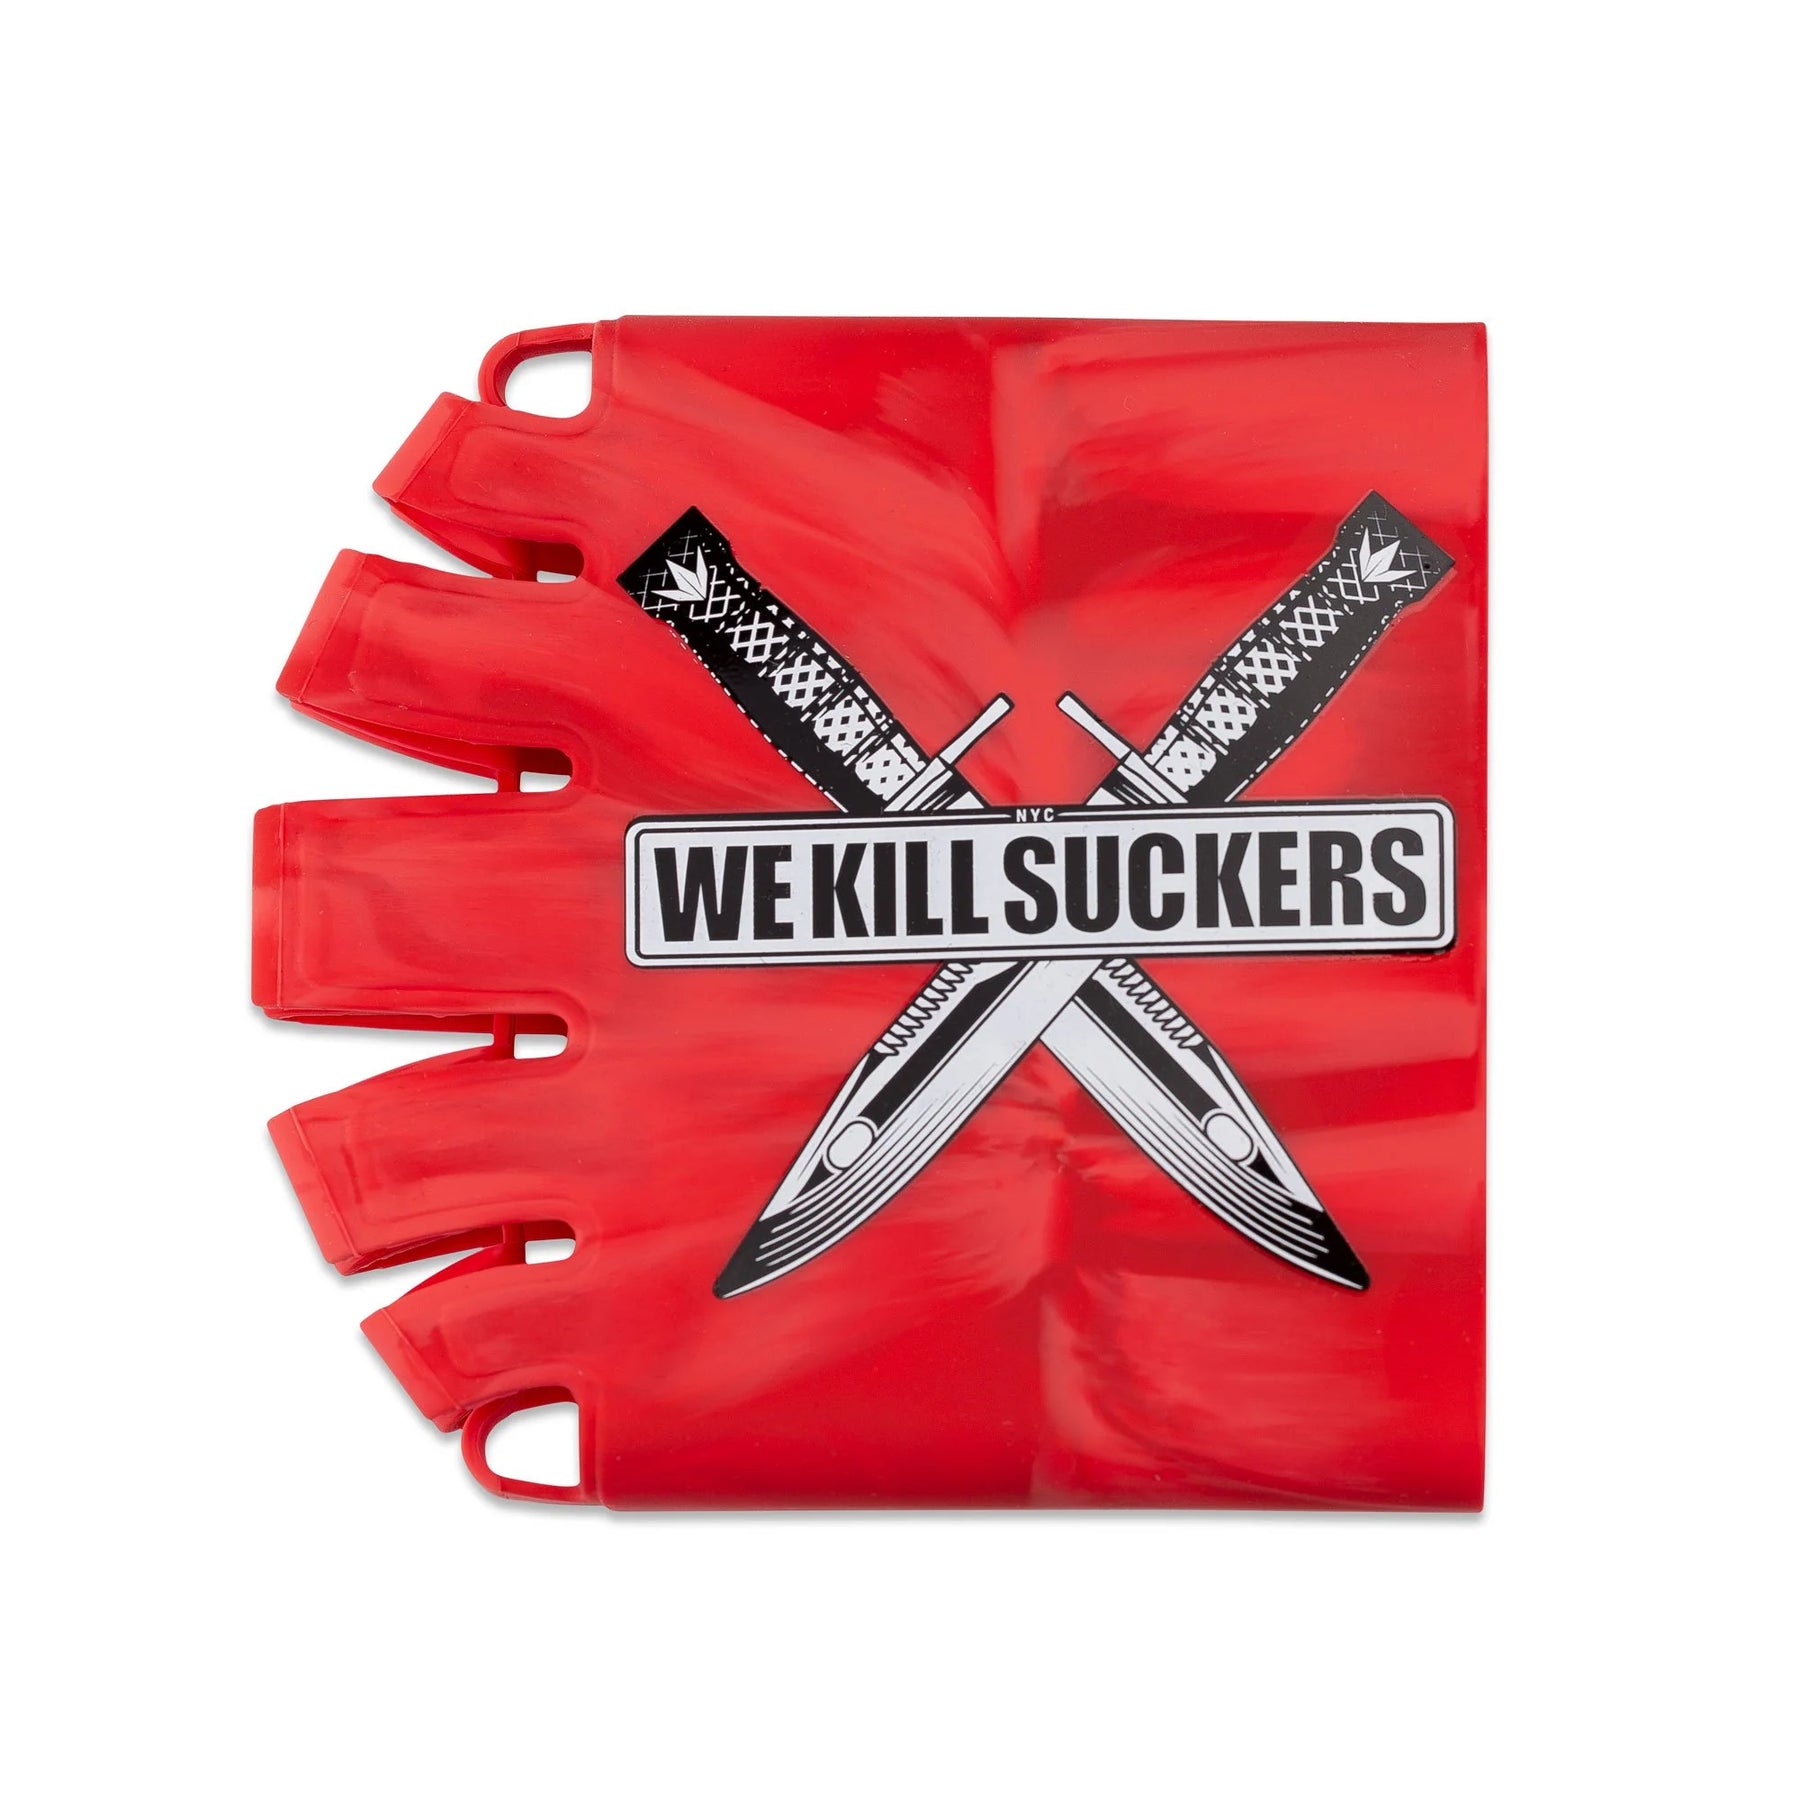 Bunkerkings - Knuckle Butt Paintball Air Tank Cover - WKS Knife - Red